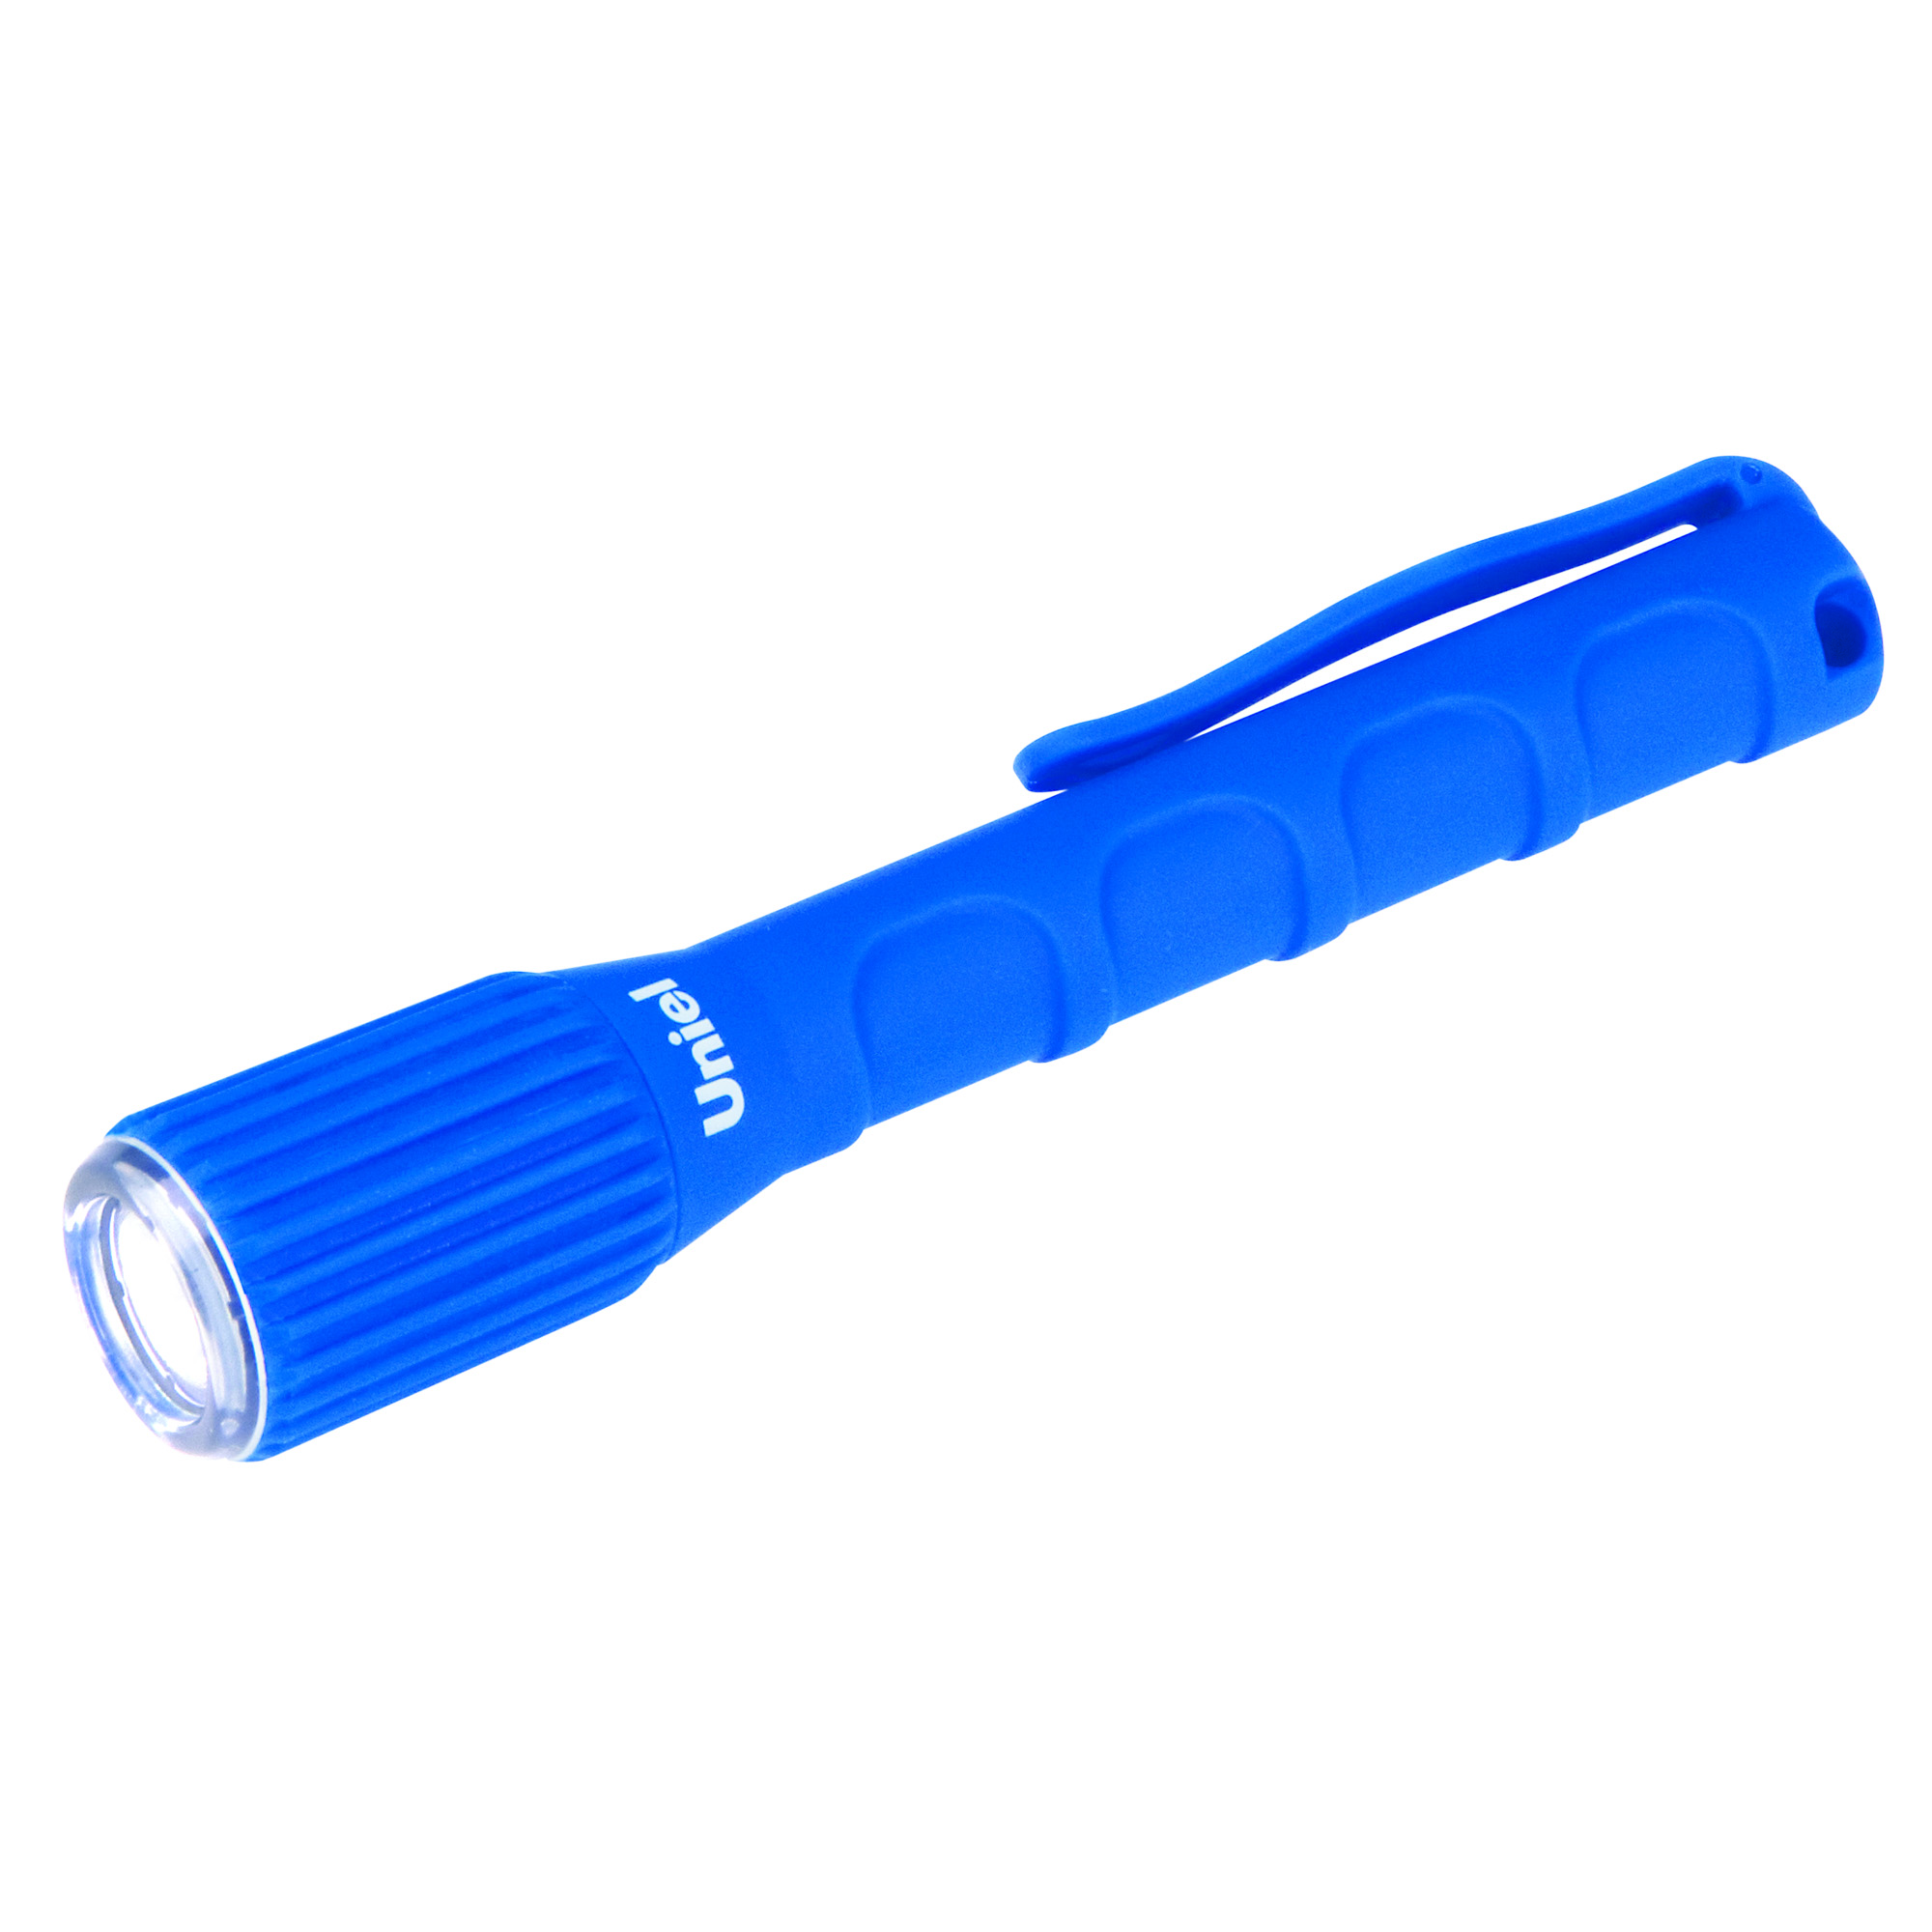 S-WP010-C Blue Фонарь Uniel серии Стандарт Reliability and protection. прорезиненный корпус. IP67. 0.5 Watt LED. упаковка кламшелл. 2хААА н-к. цвет синий